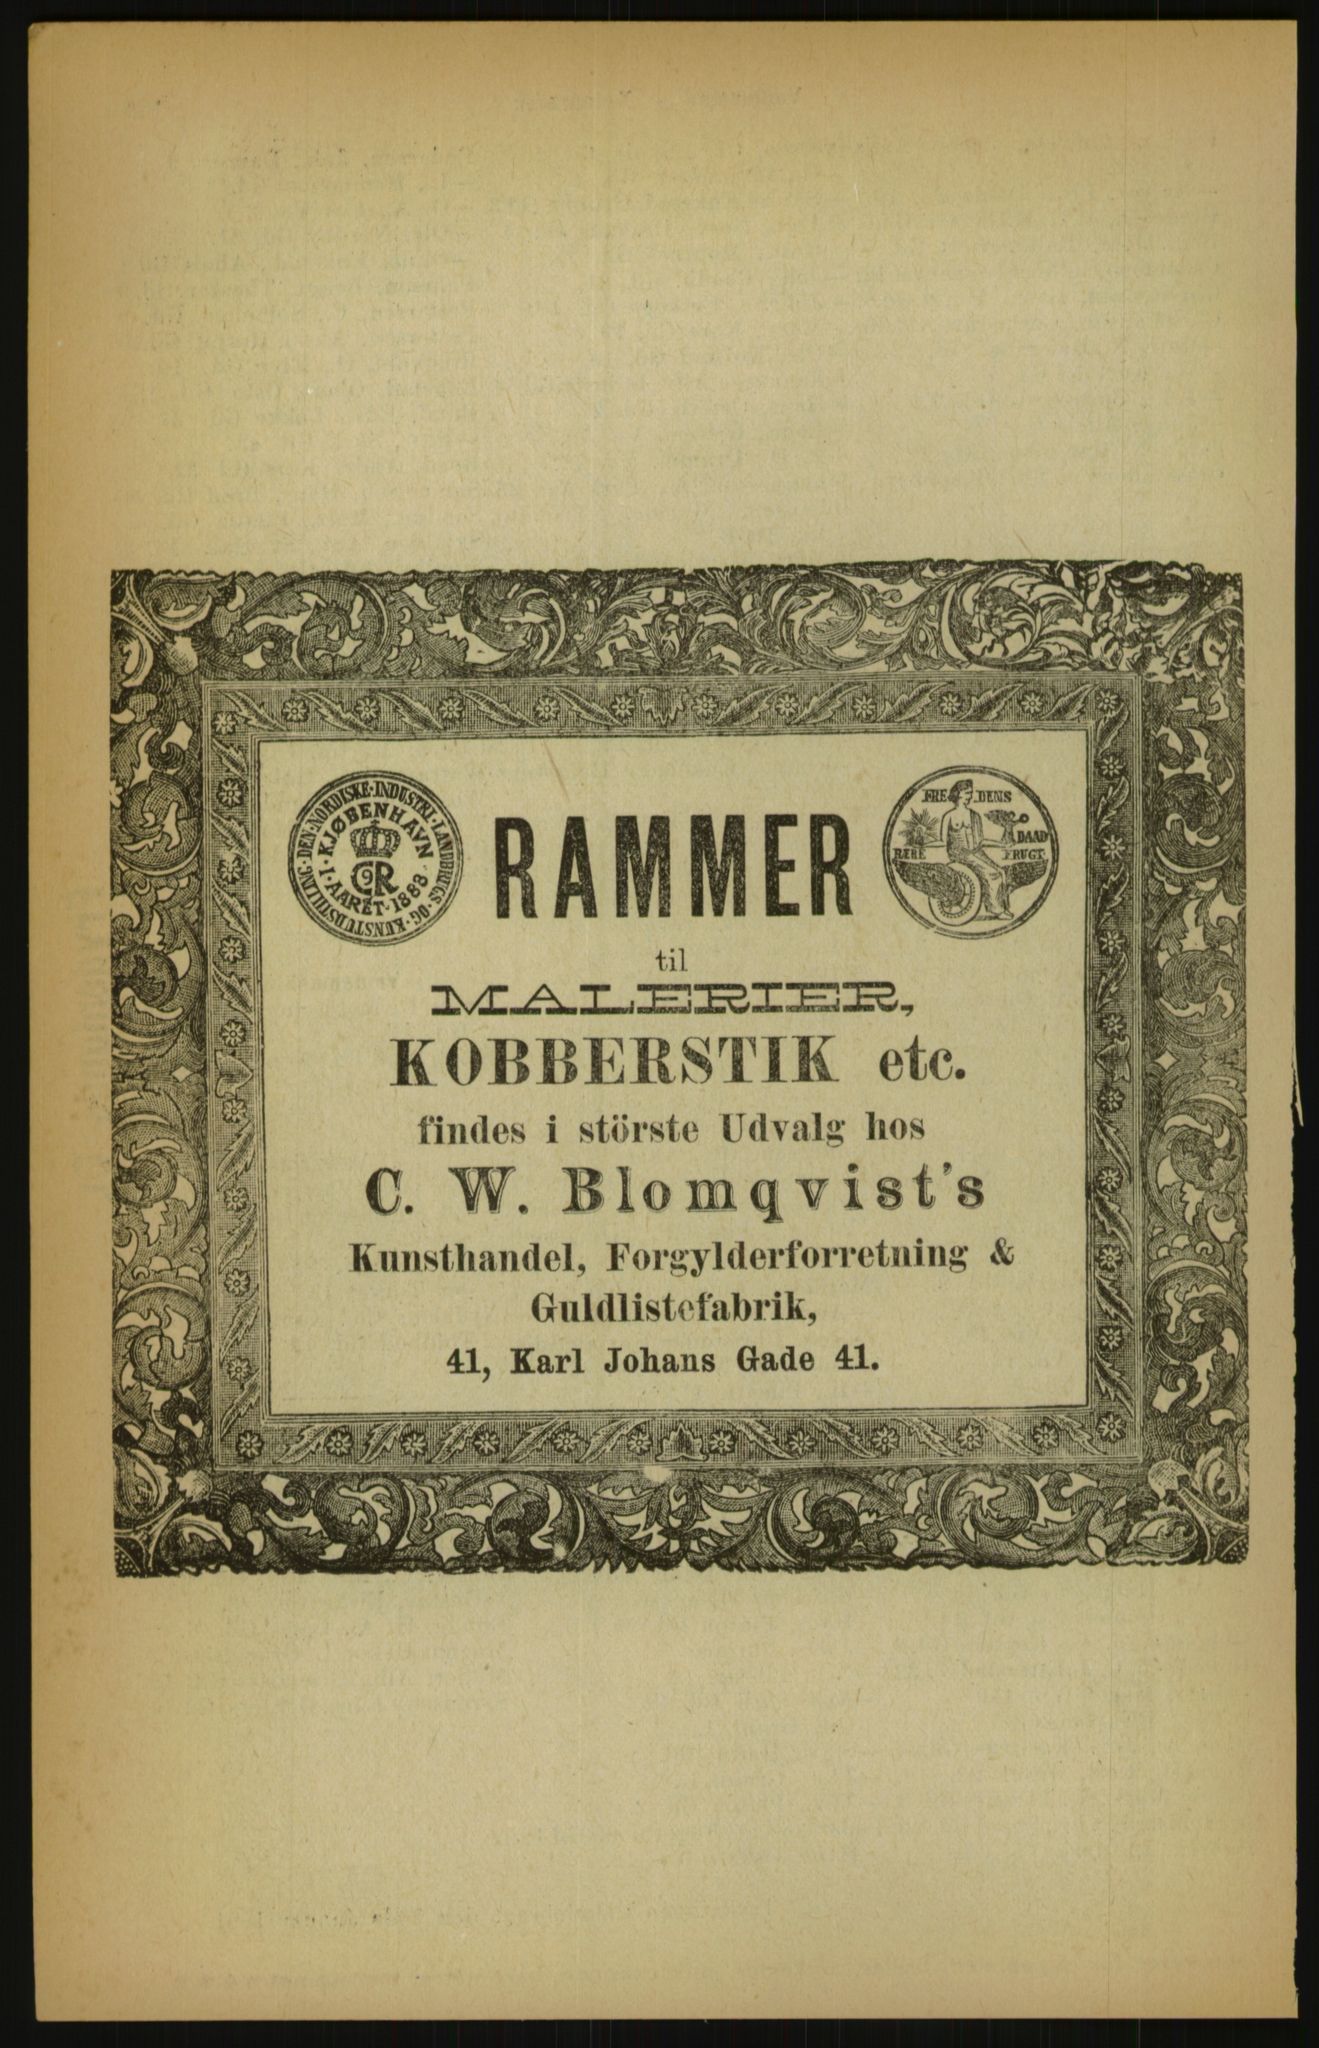 Kristiania/Oslo adressebok, PUBL/-, 1891